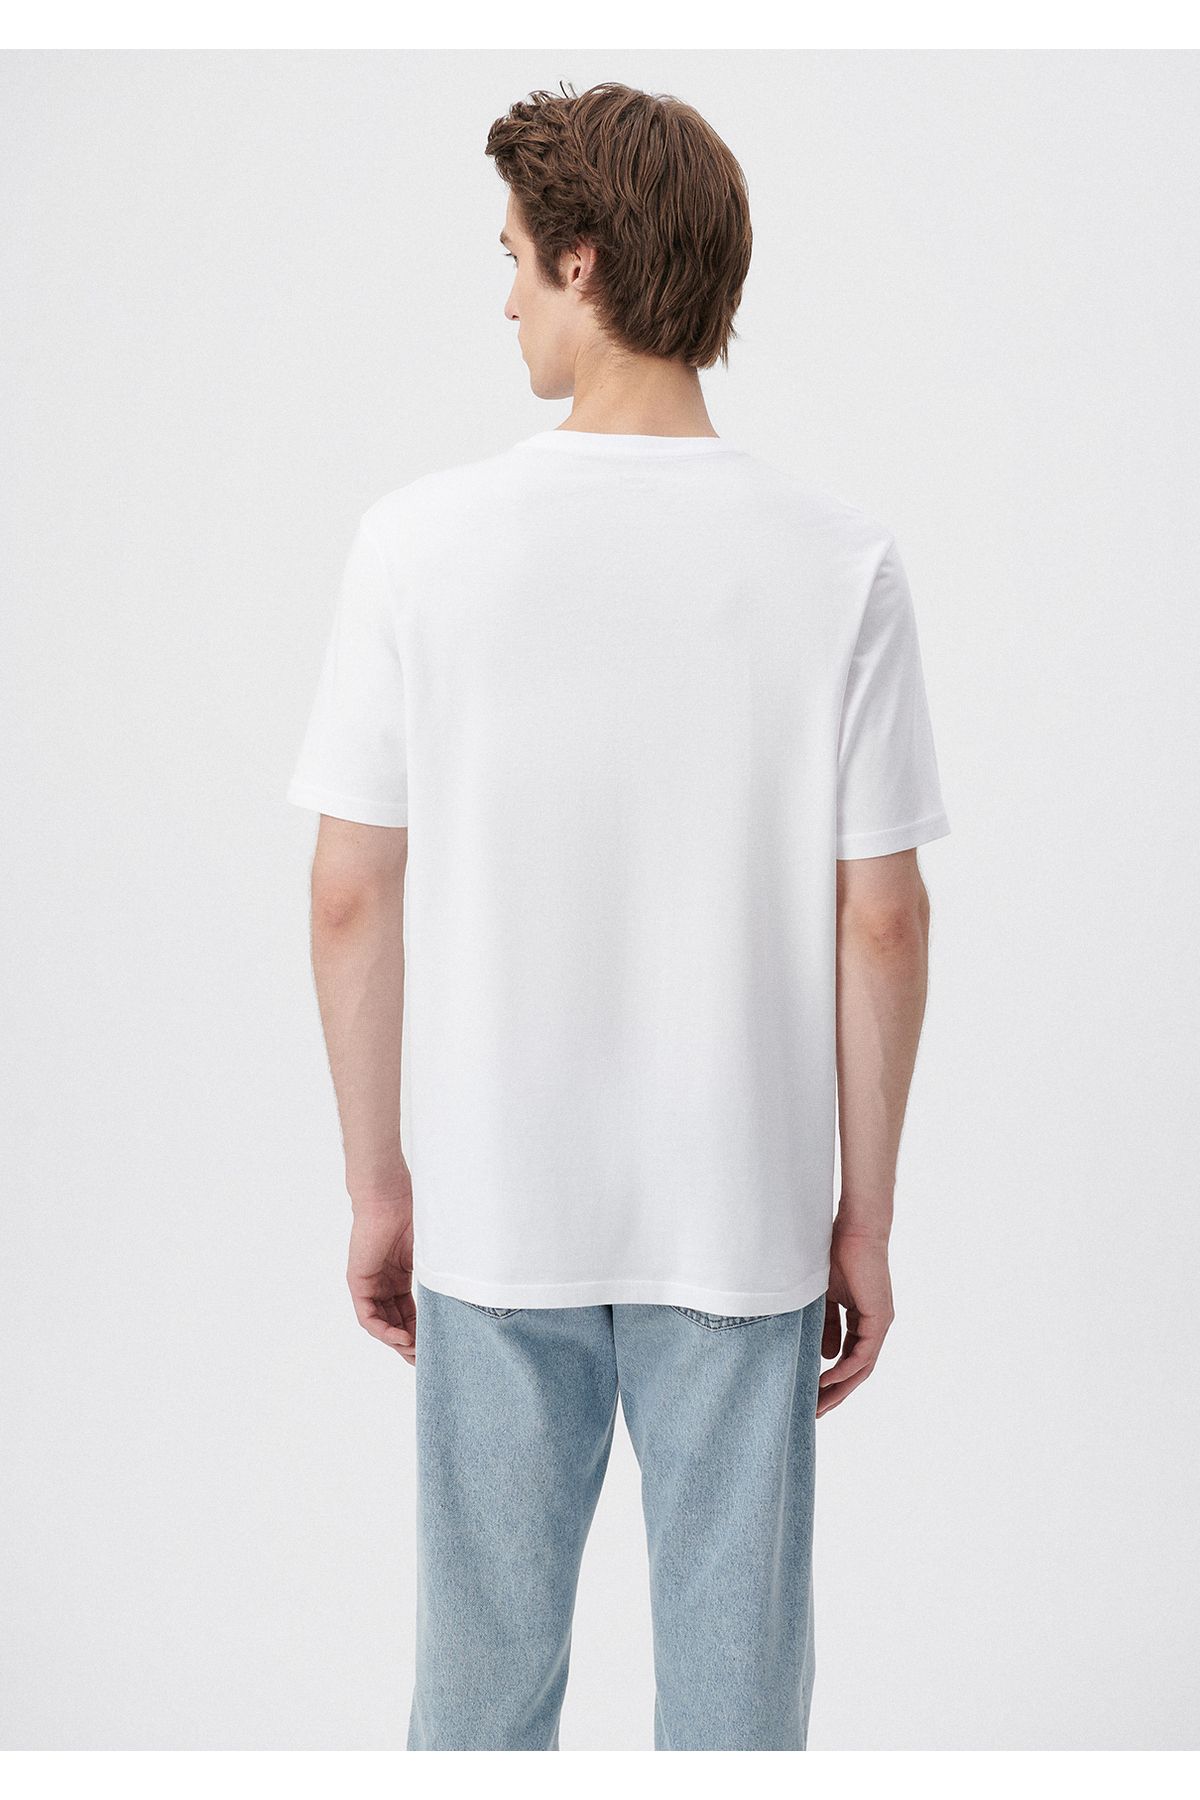 Mavi آرم چاپ شده تی شرت سفید به طور منظم / برش معمولی 066842-620